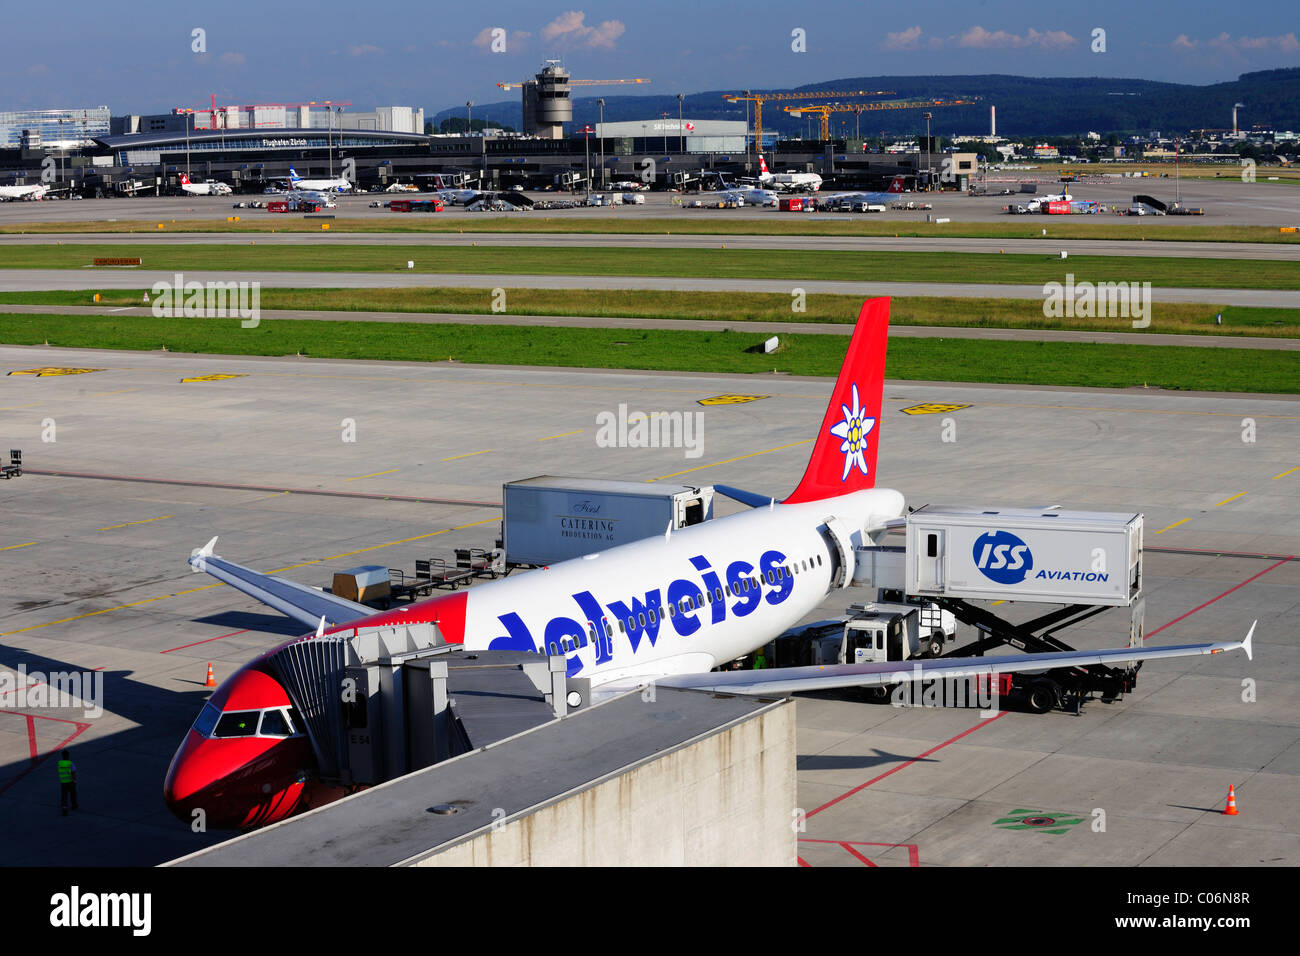 Airbus 320 from Edelweiss Air, Dock Midfield, Zurich Airport, Switzerland, Europe Stock Photo